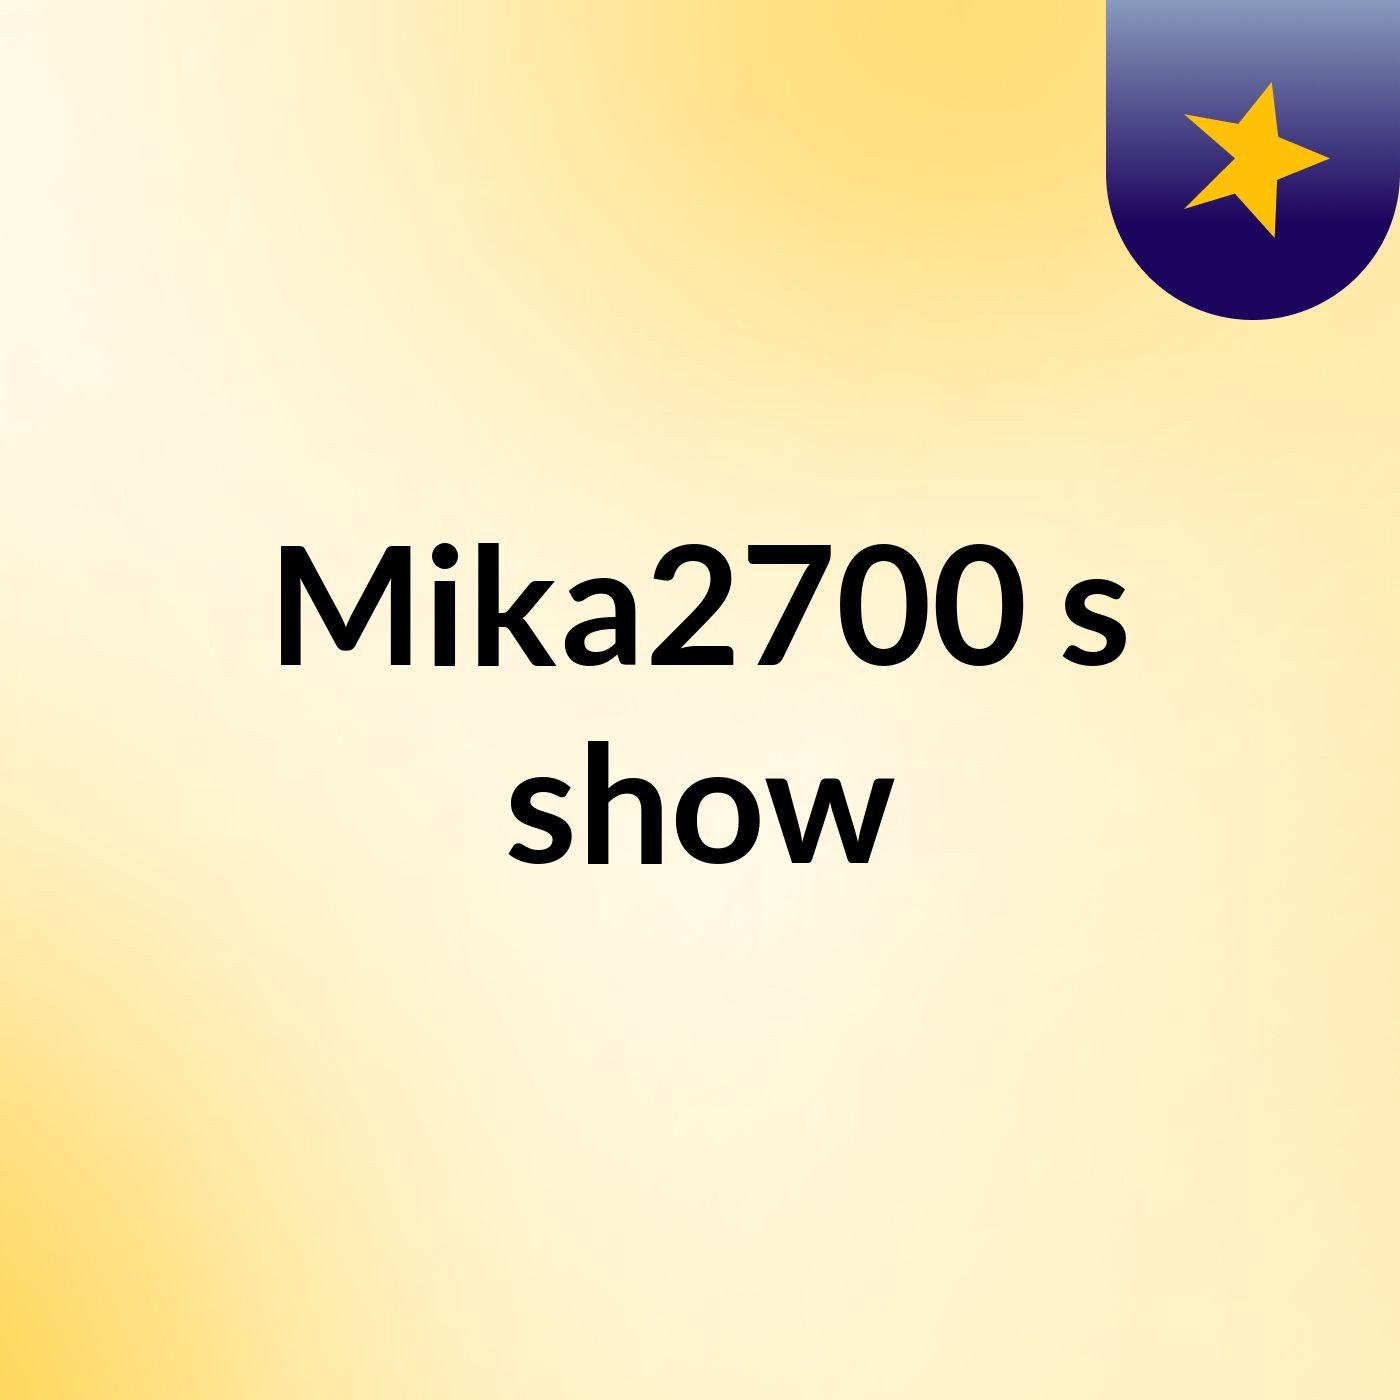 Mika2700's show